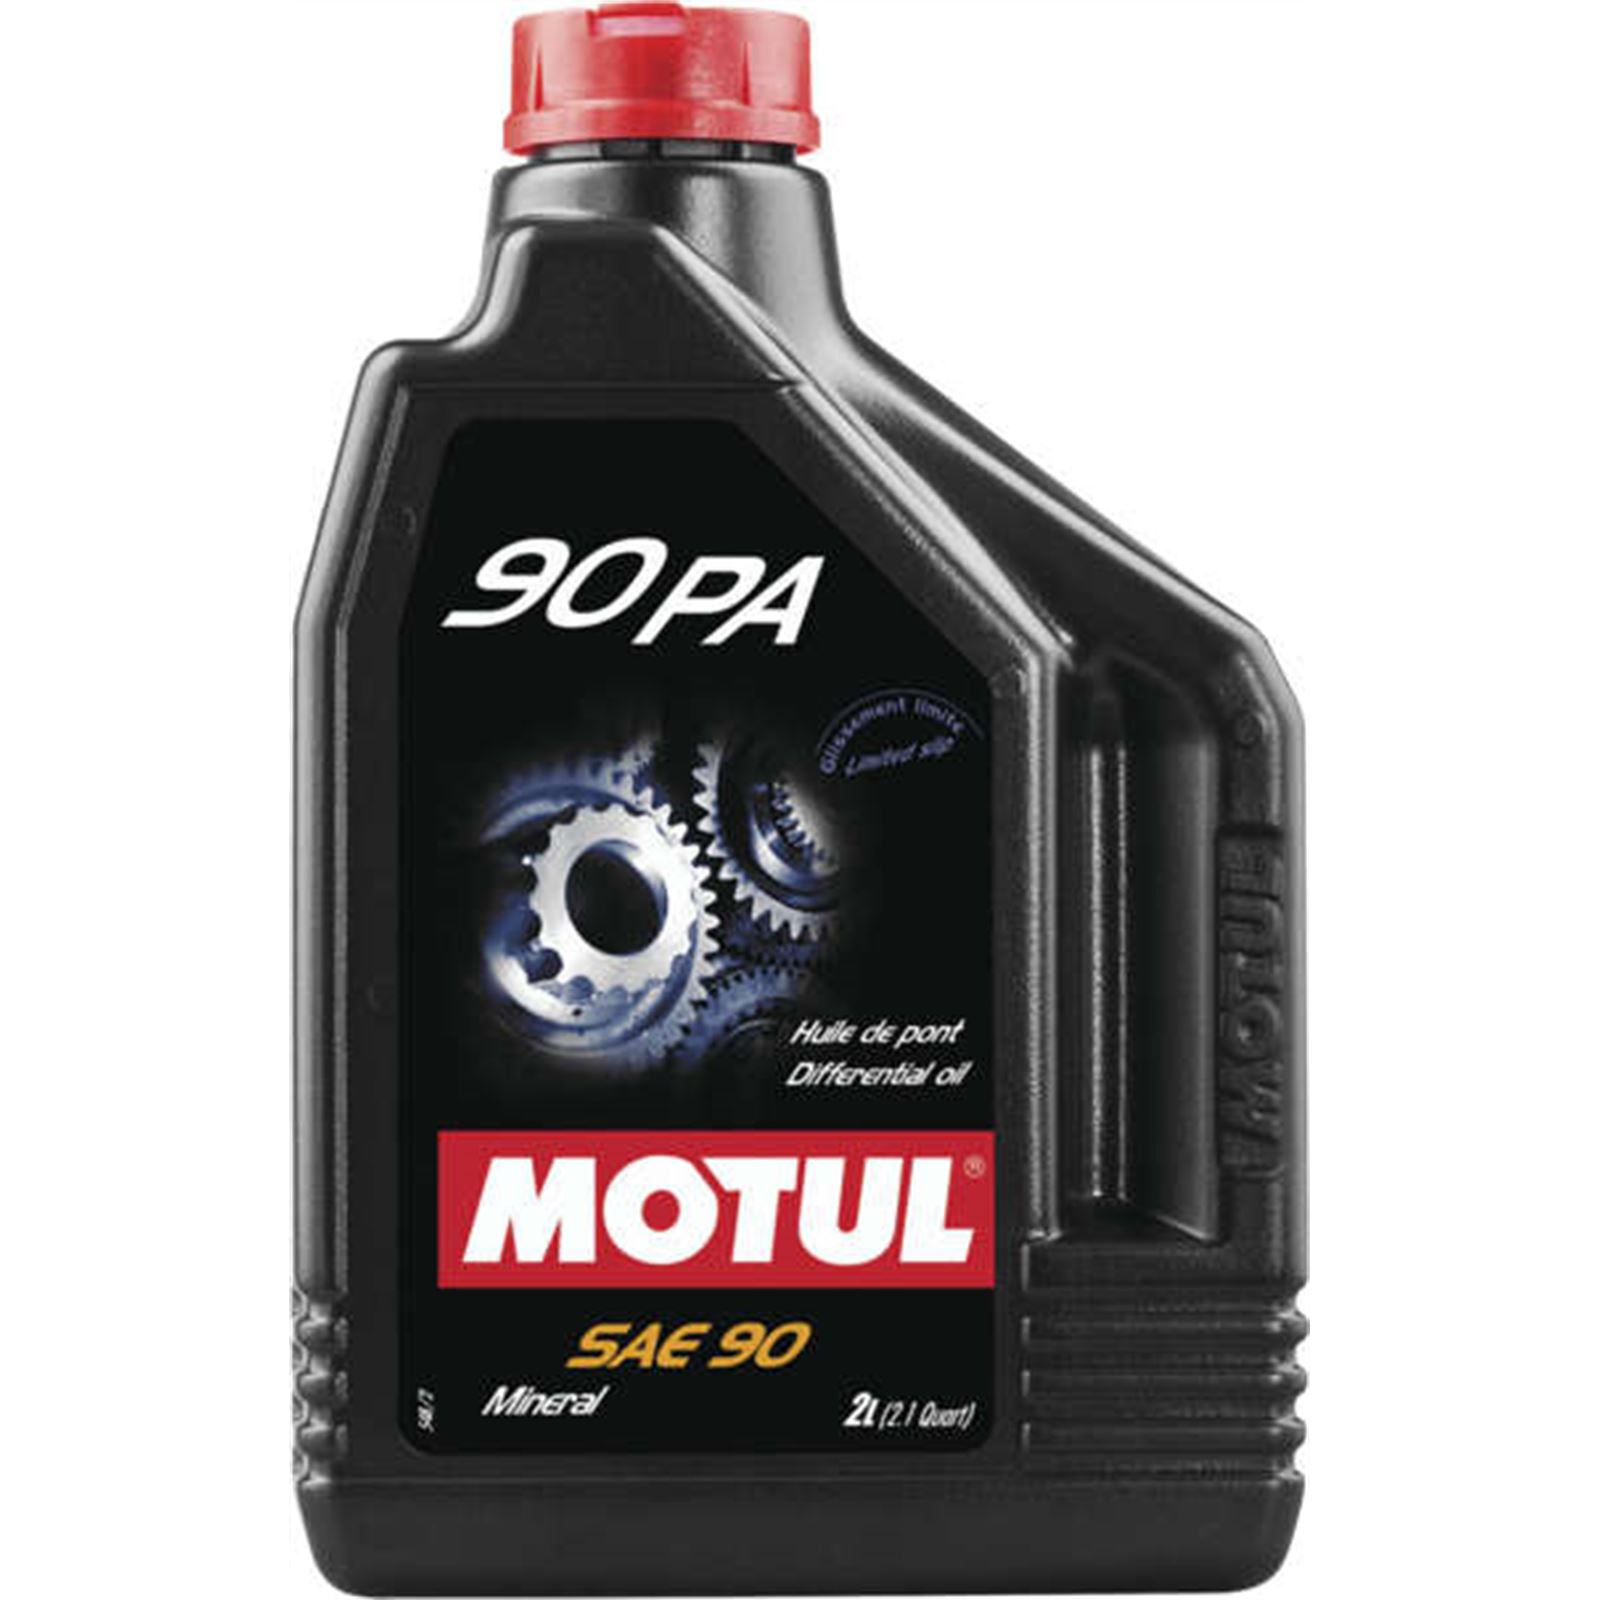 Motul 90 PA Oil 2 liter